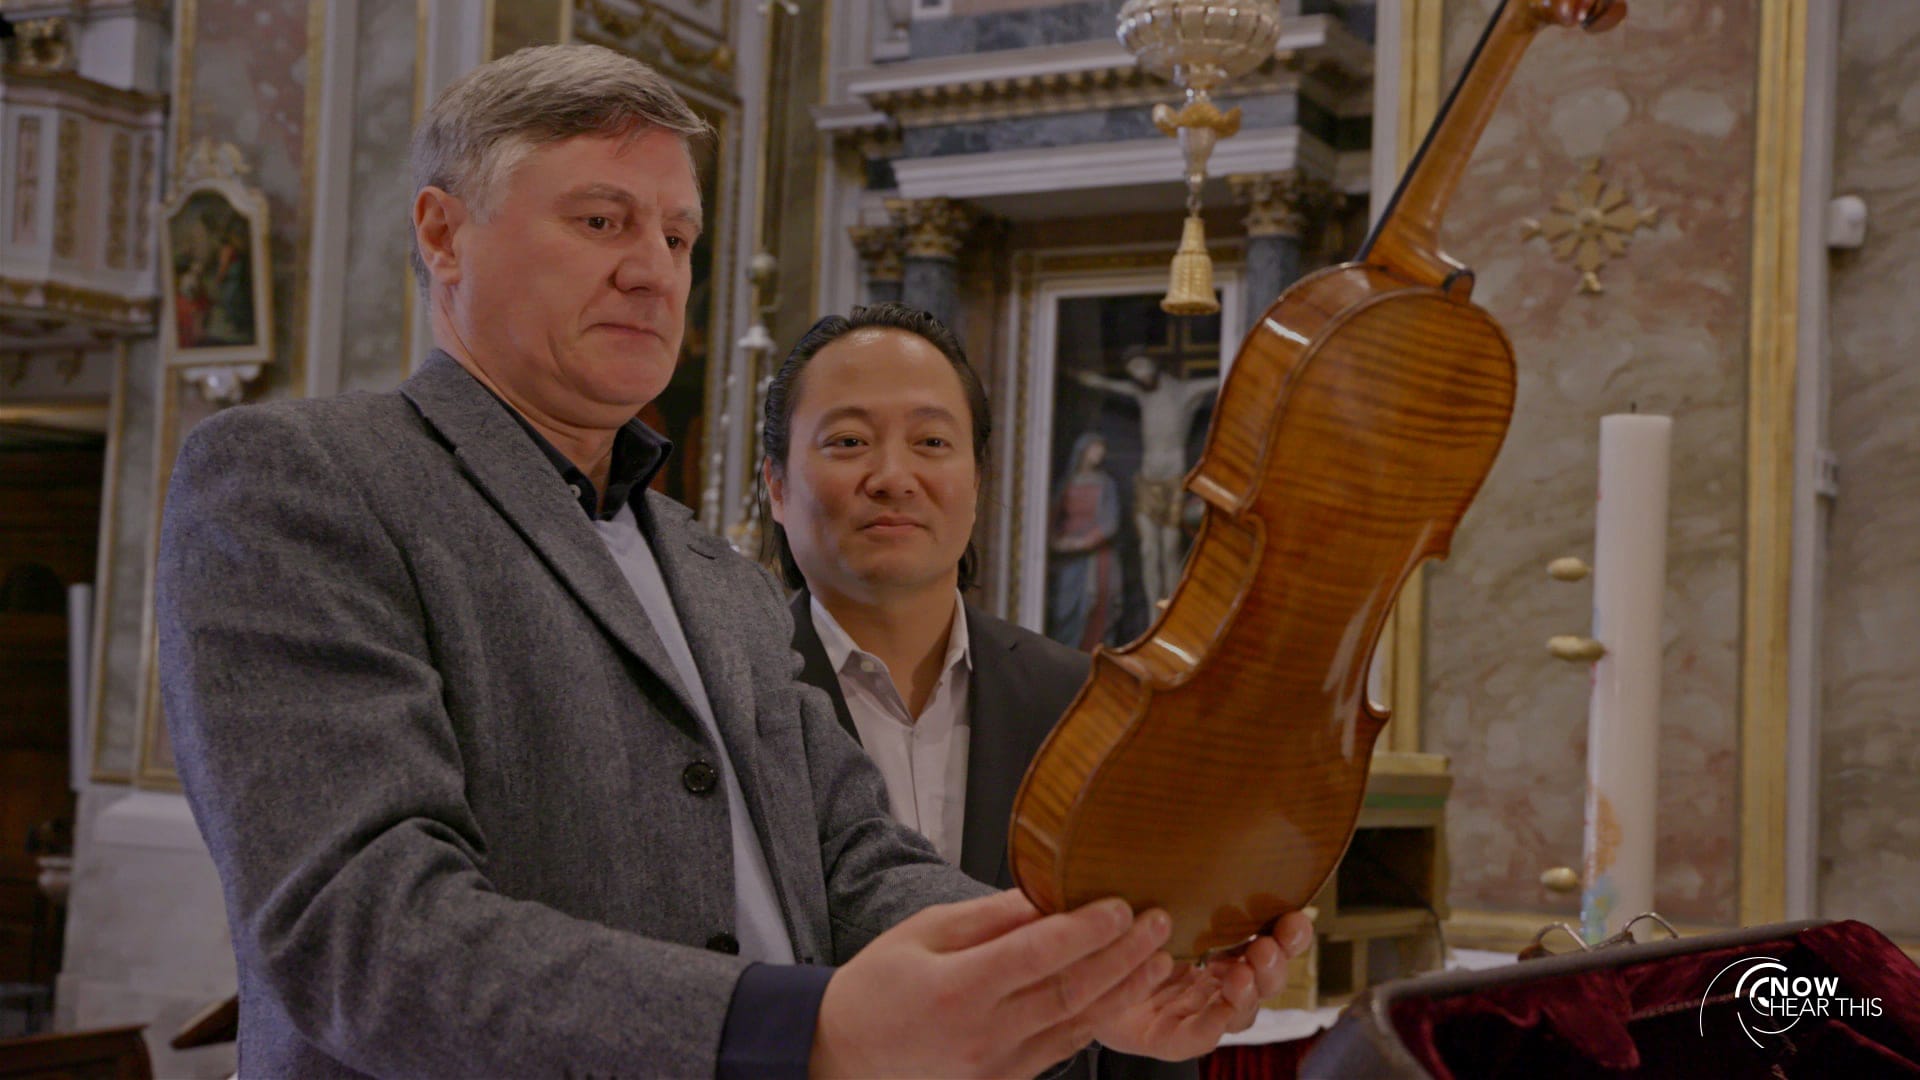 Scott looking at a Stradivarius